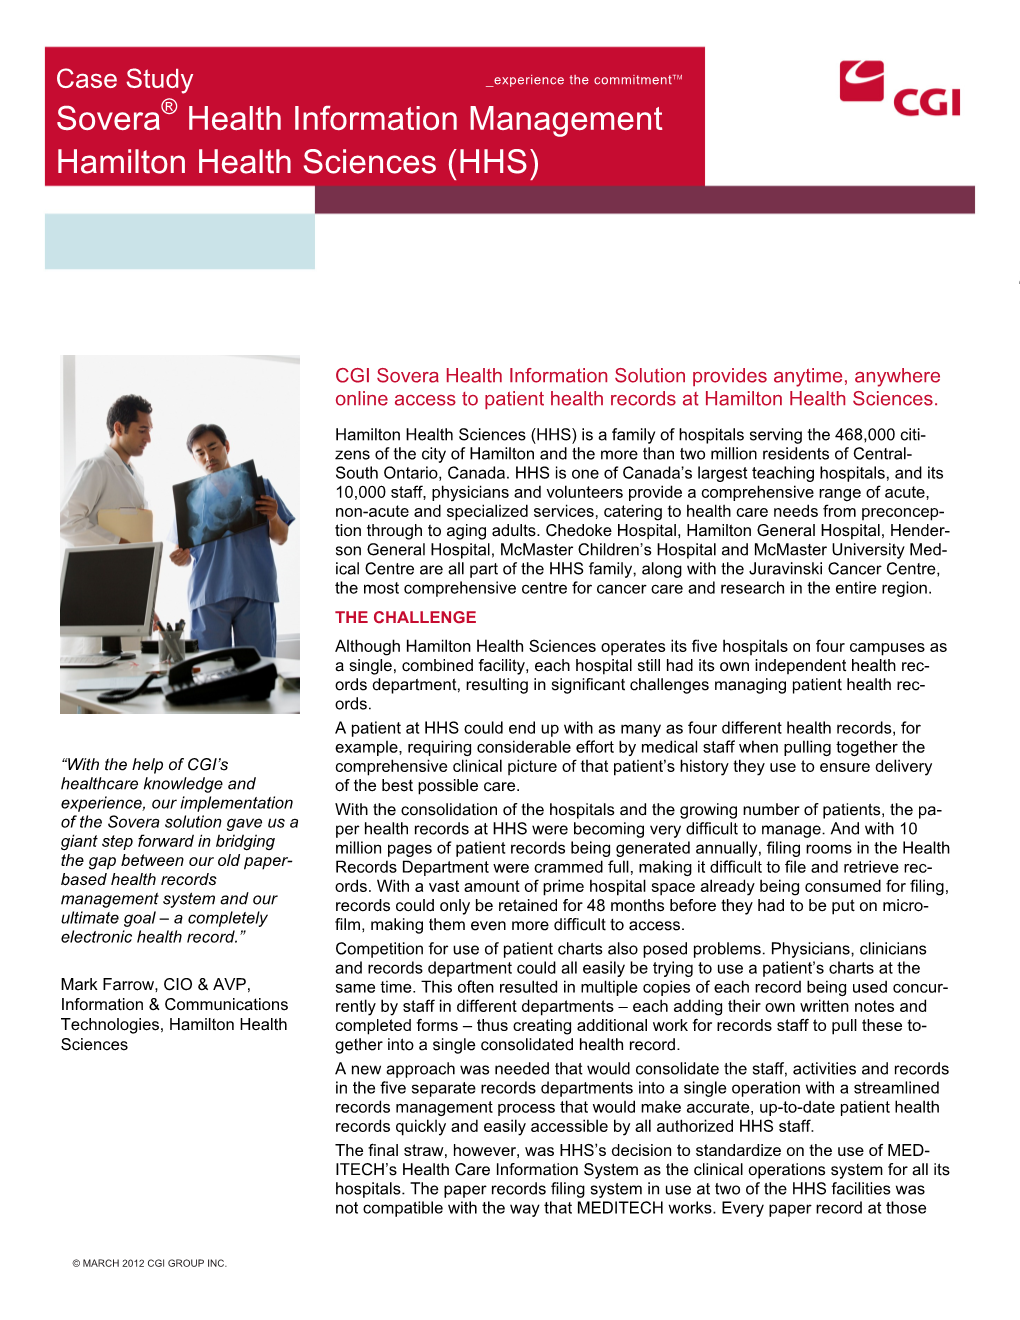 CGI Sovera Health Information Management Solution